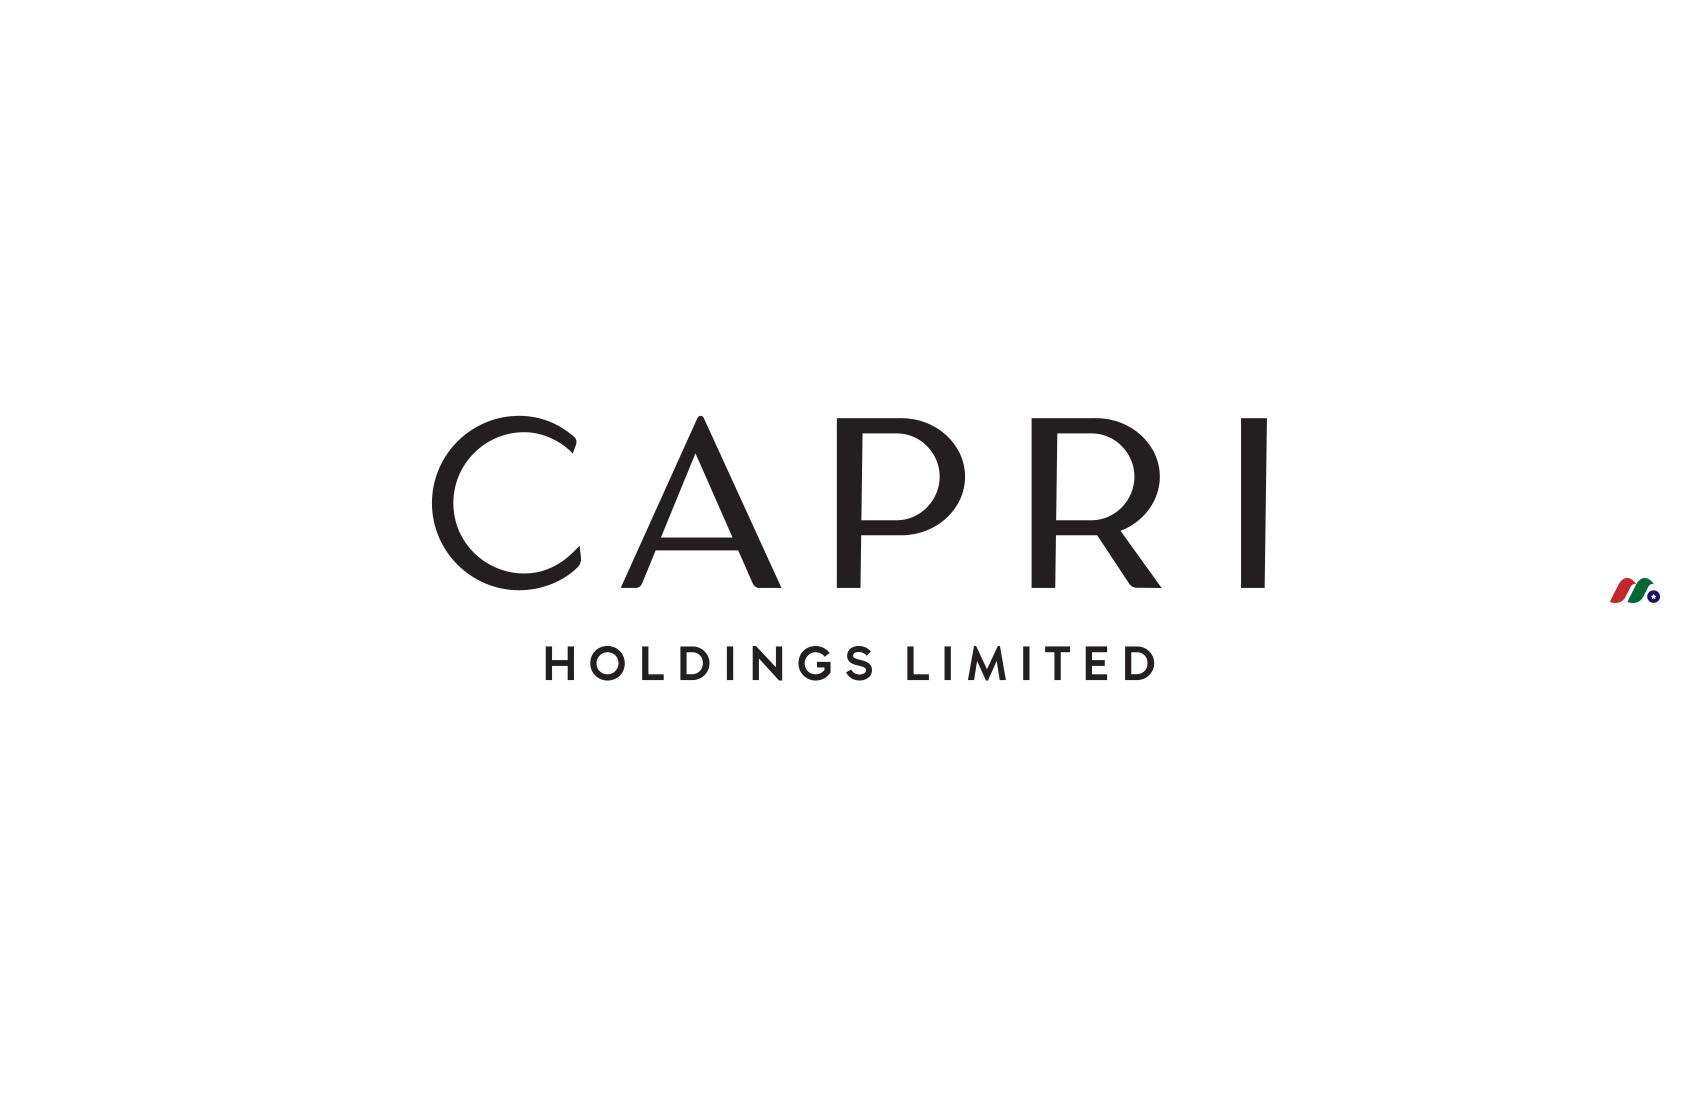 原Michael Kors：卡普里控股 Capri Holdings Limited(CPRI)